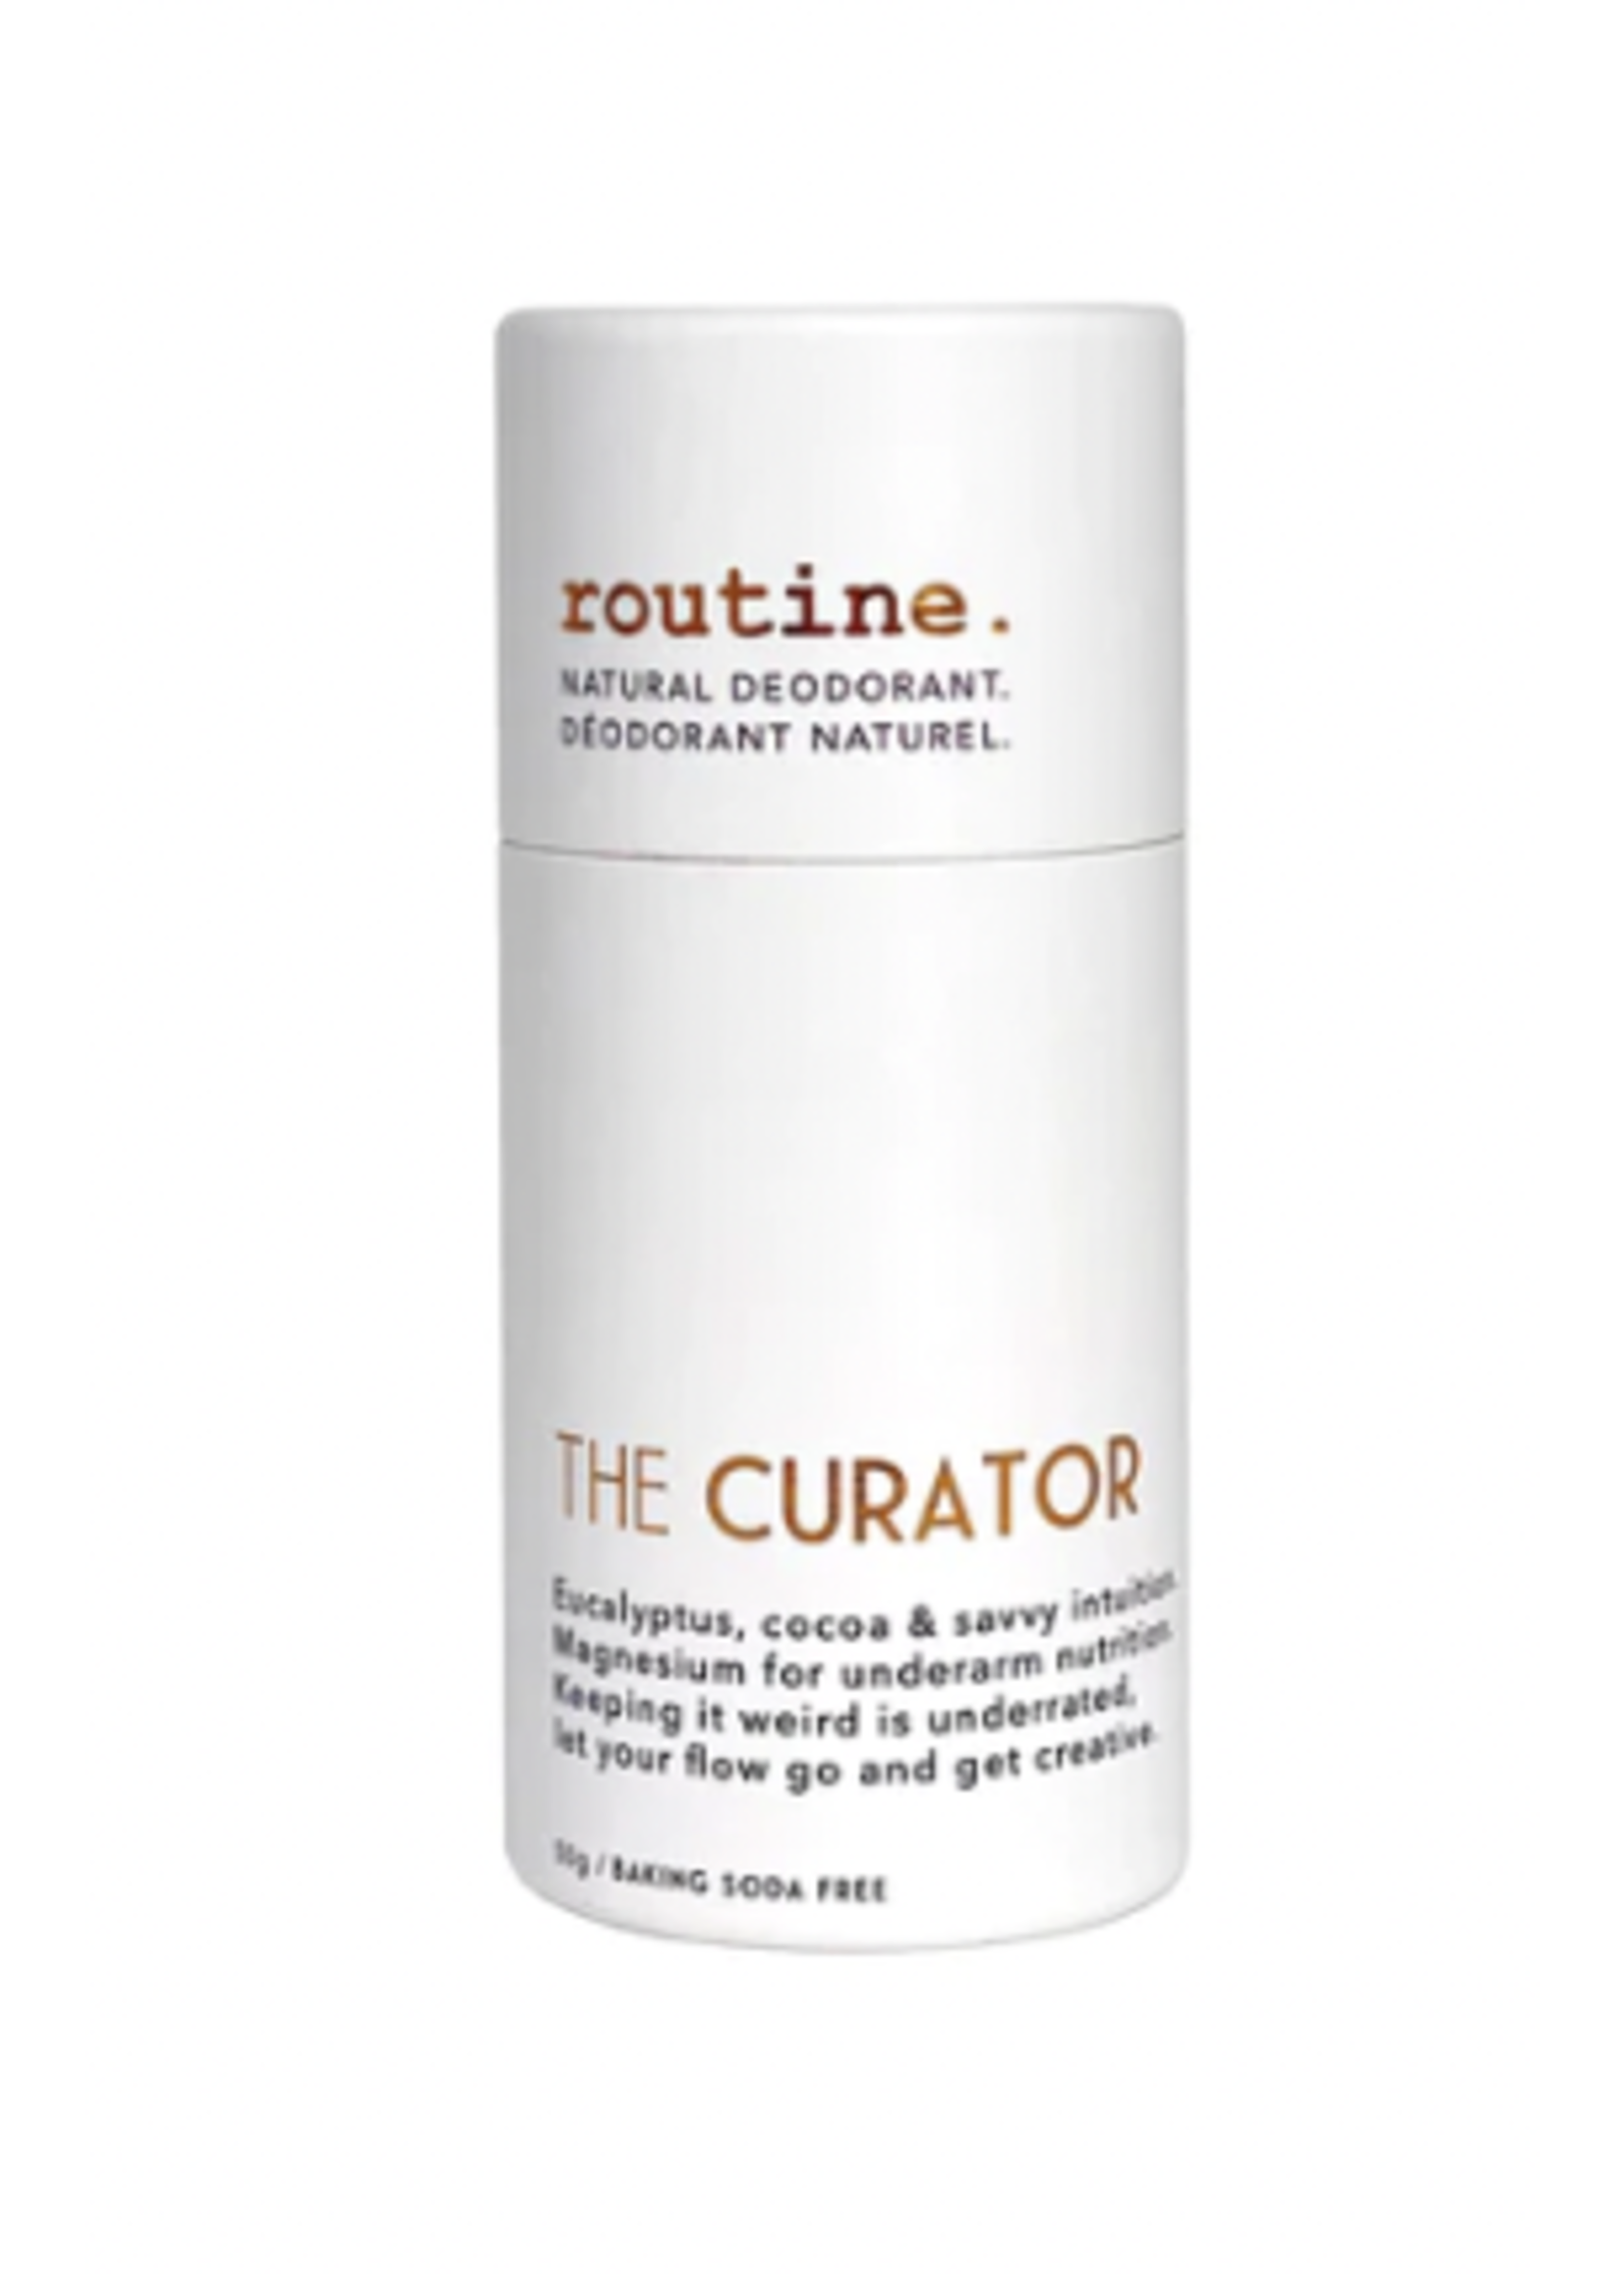 Routine Routine Deodorant: The Curator